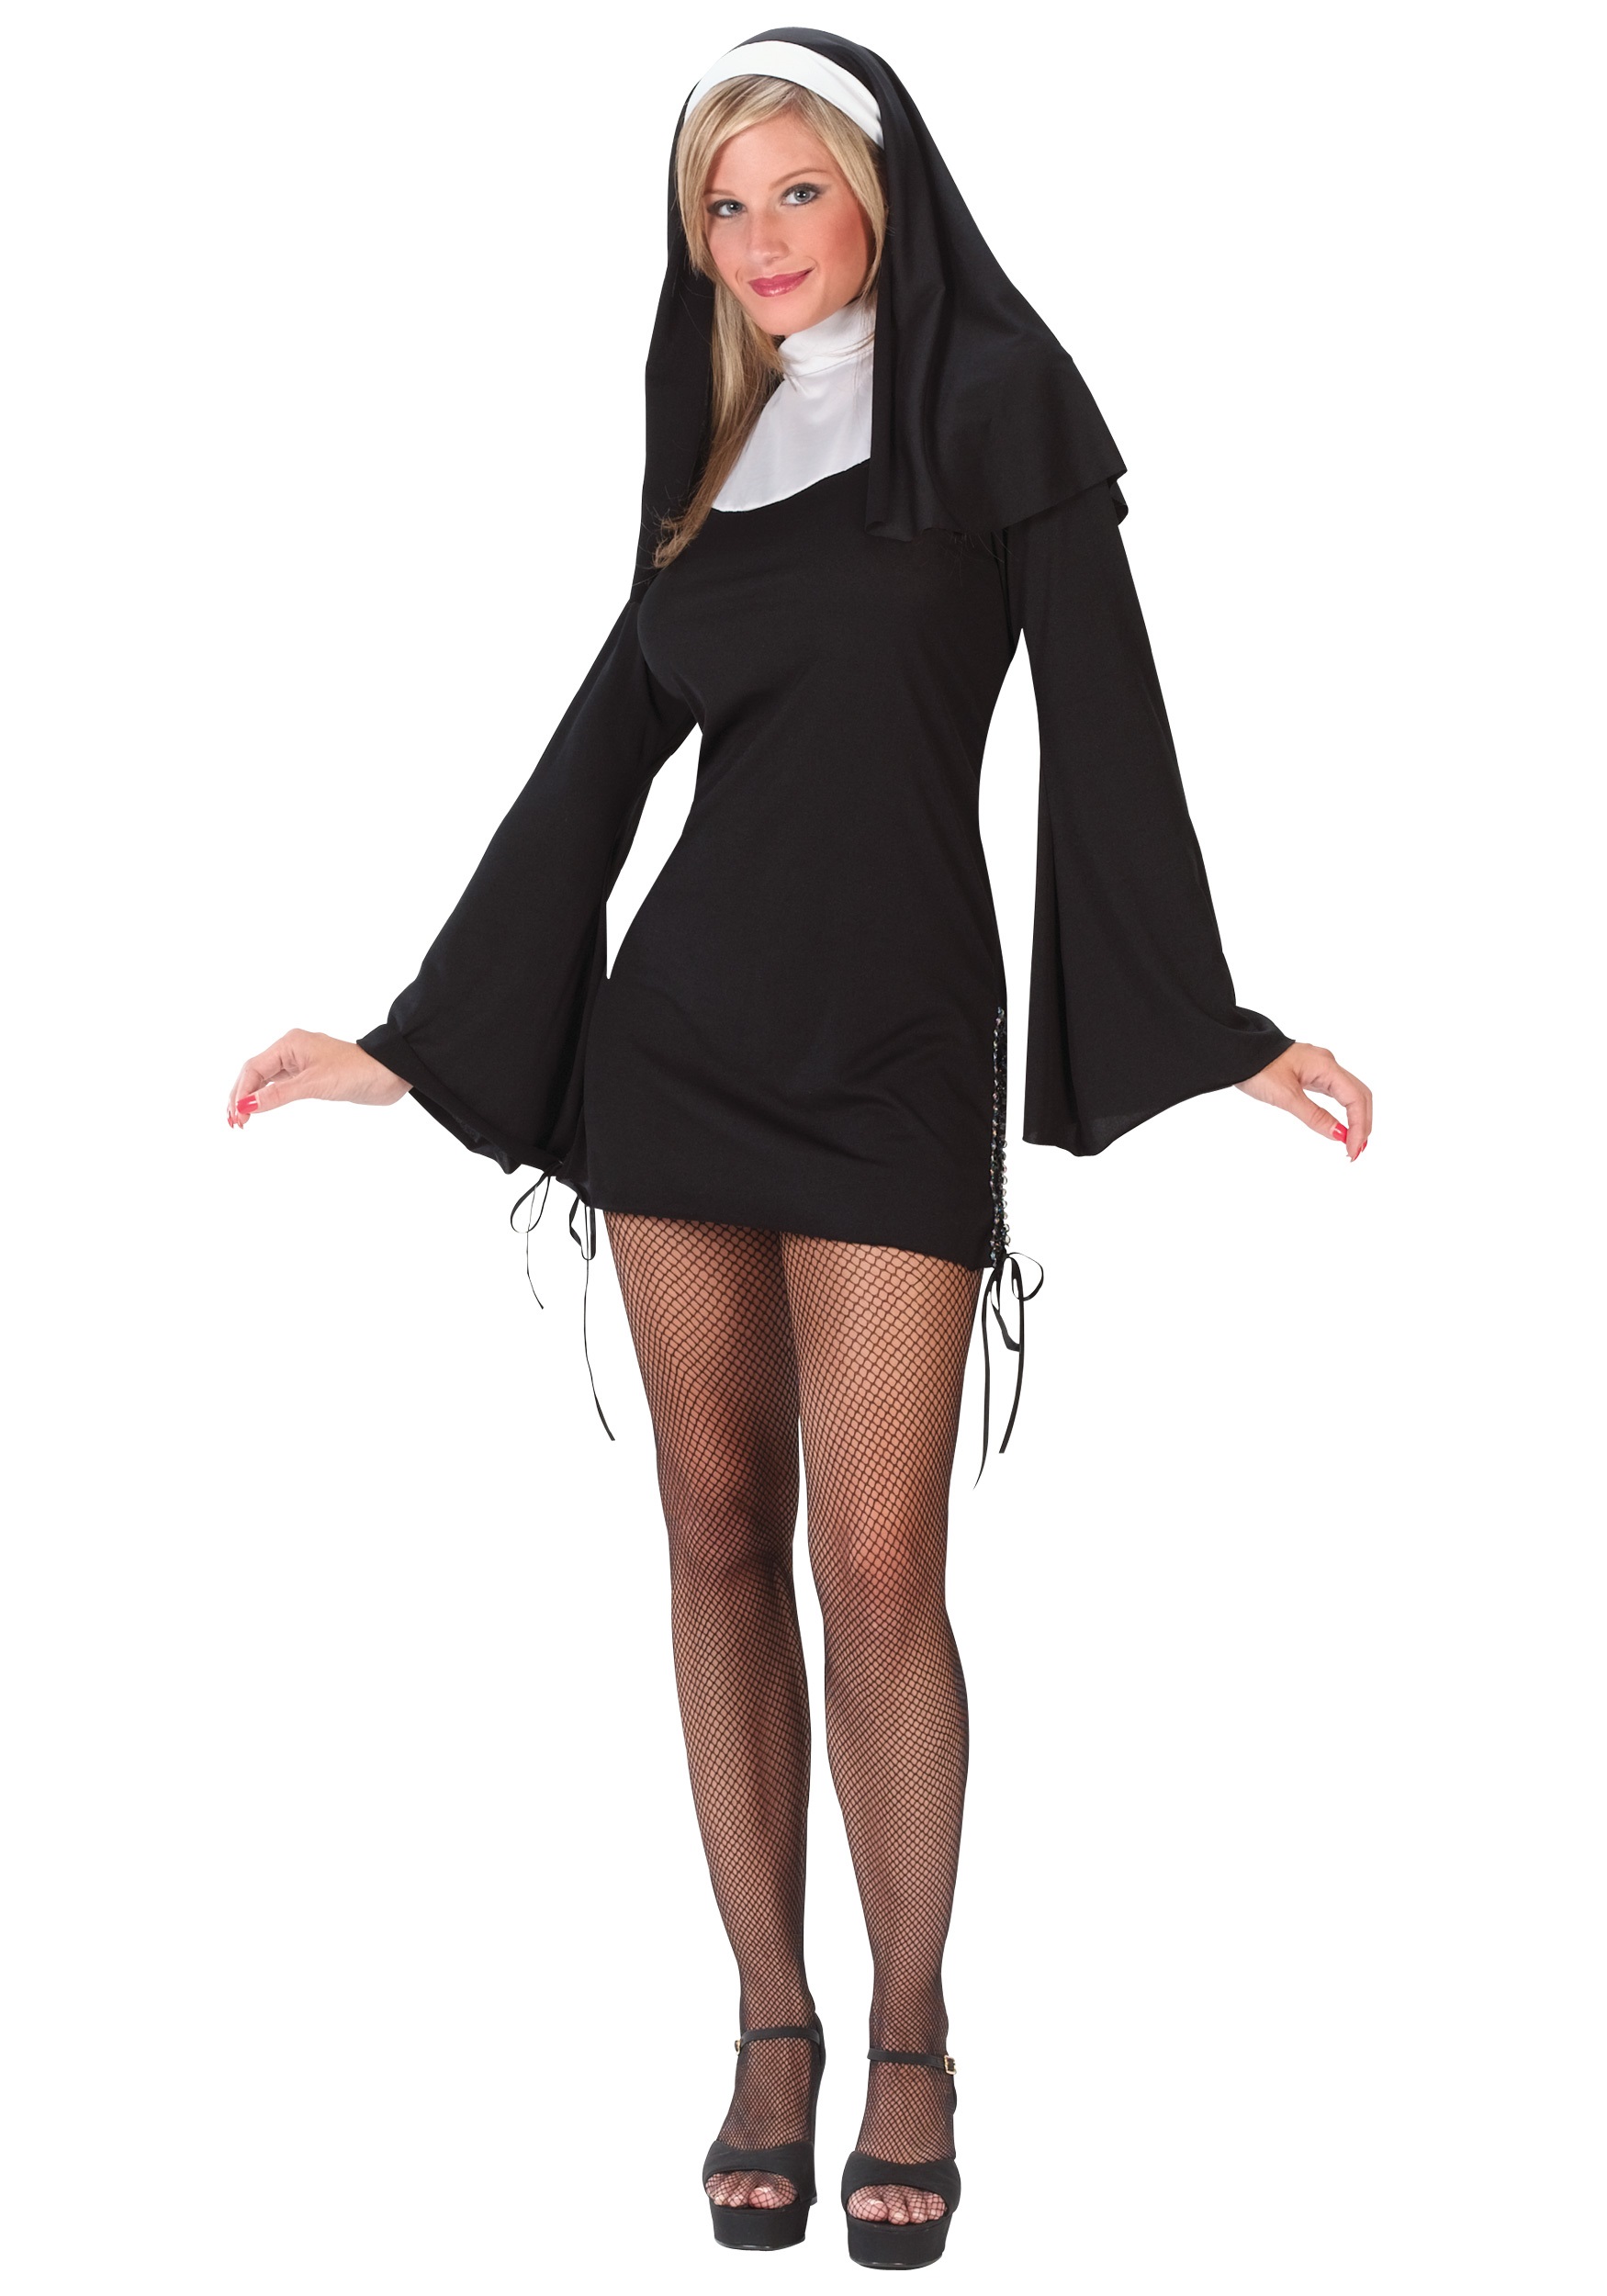 Photos - Fancy Dress Fun World Naughty Nun Adult Costume Black/White FU9957